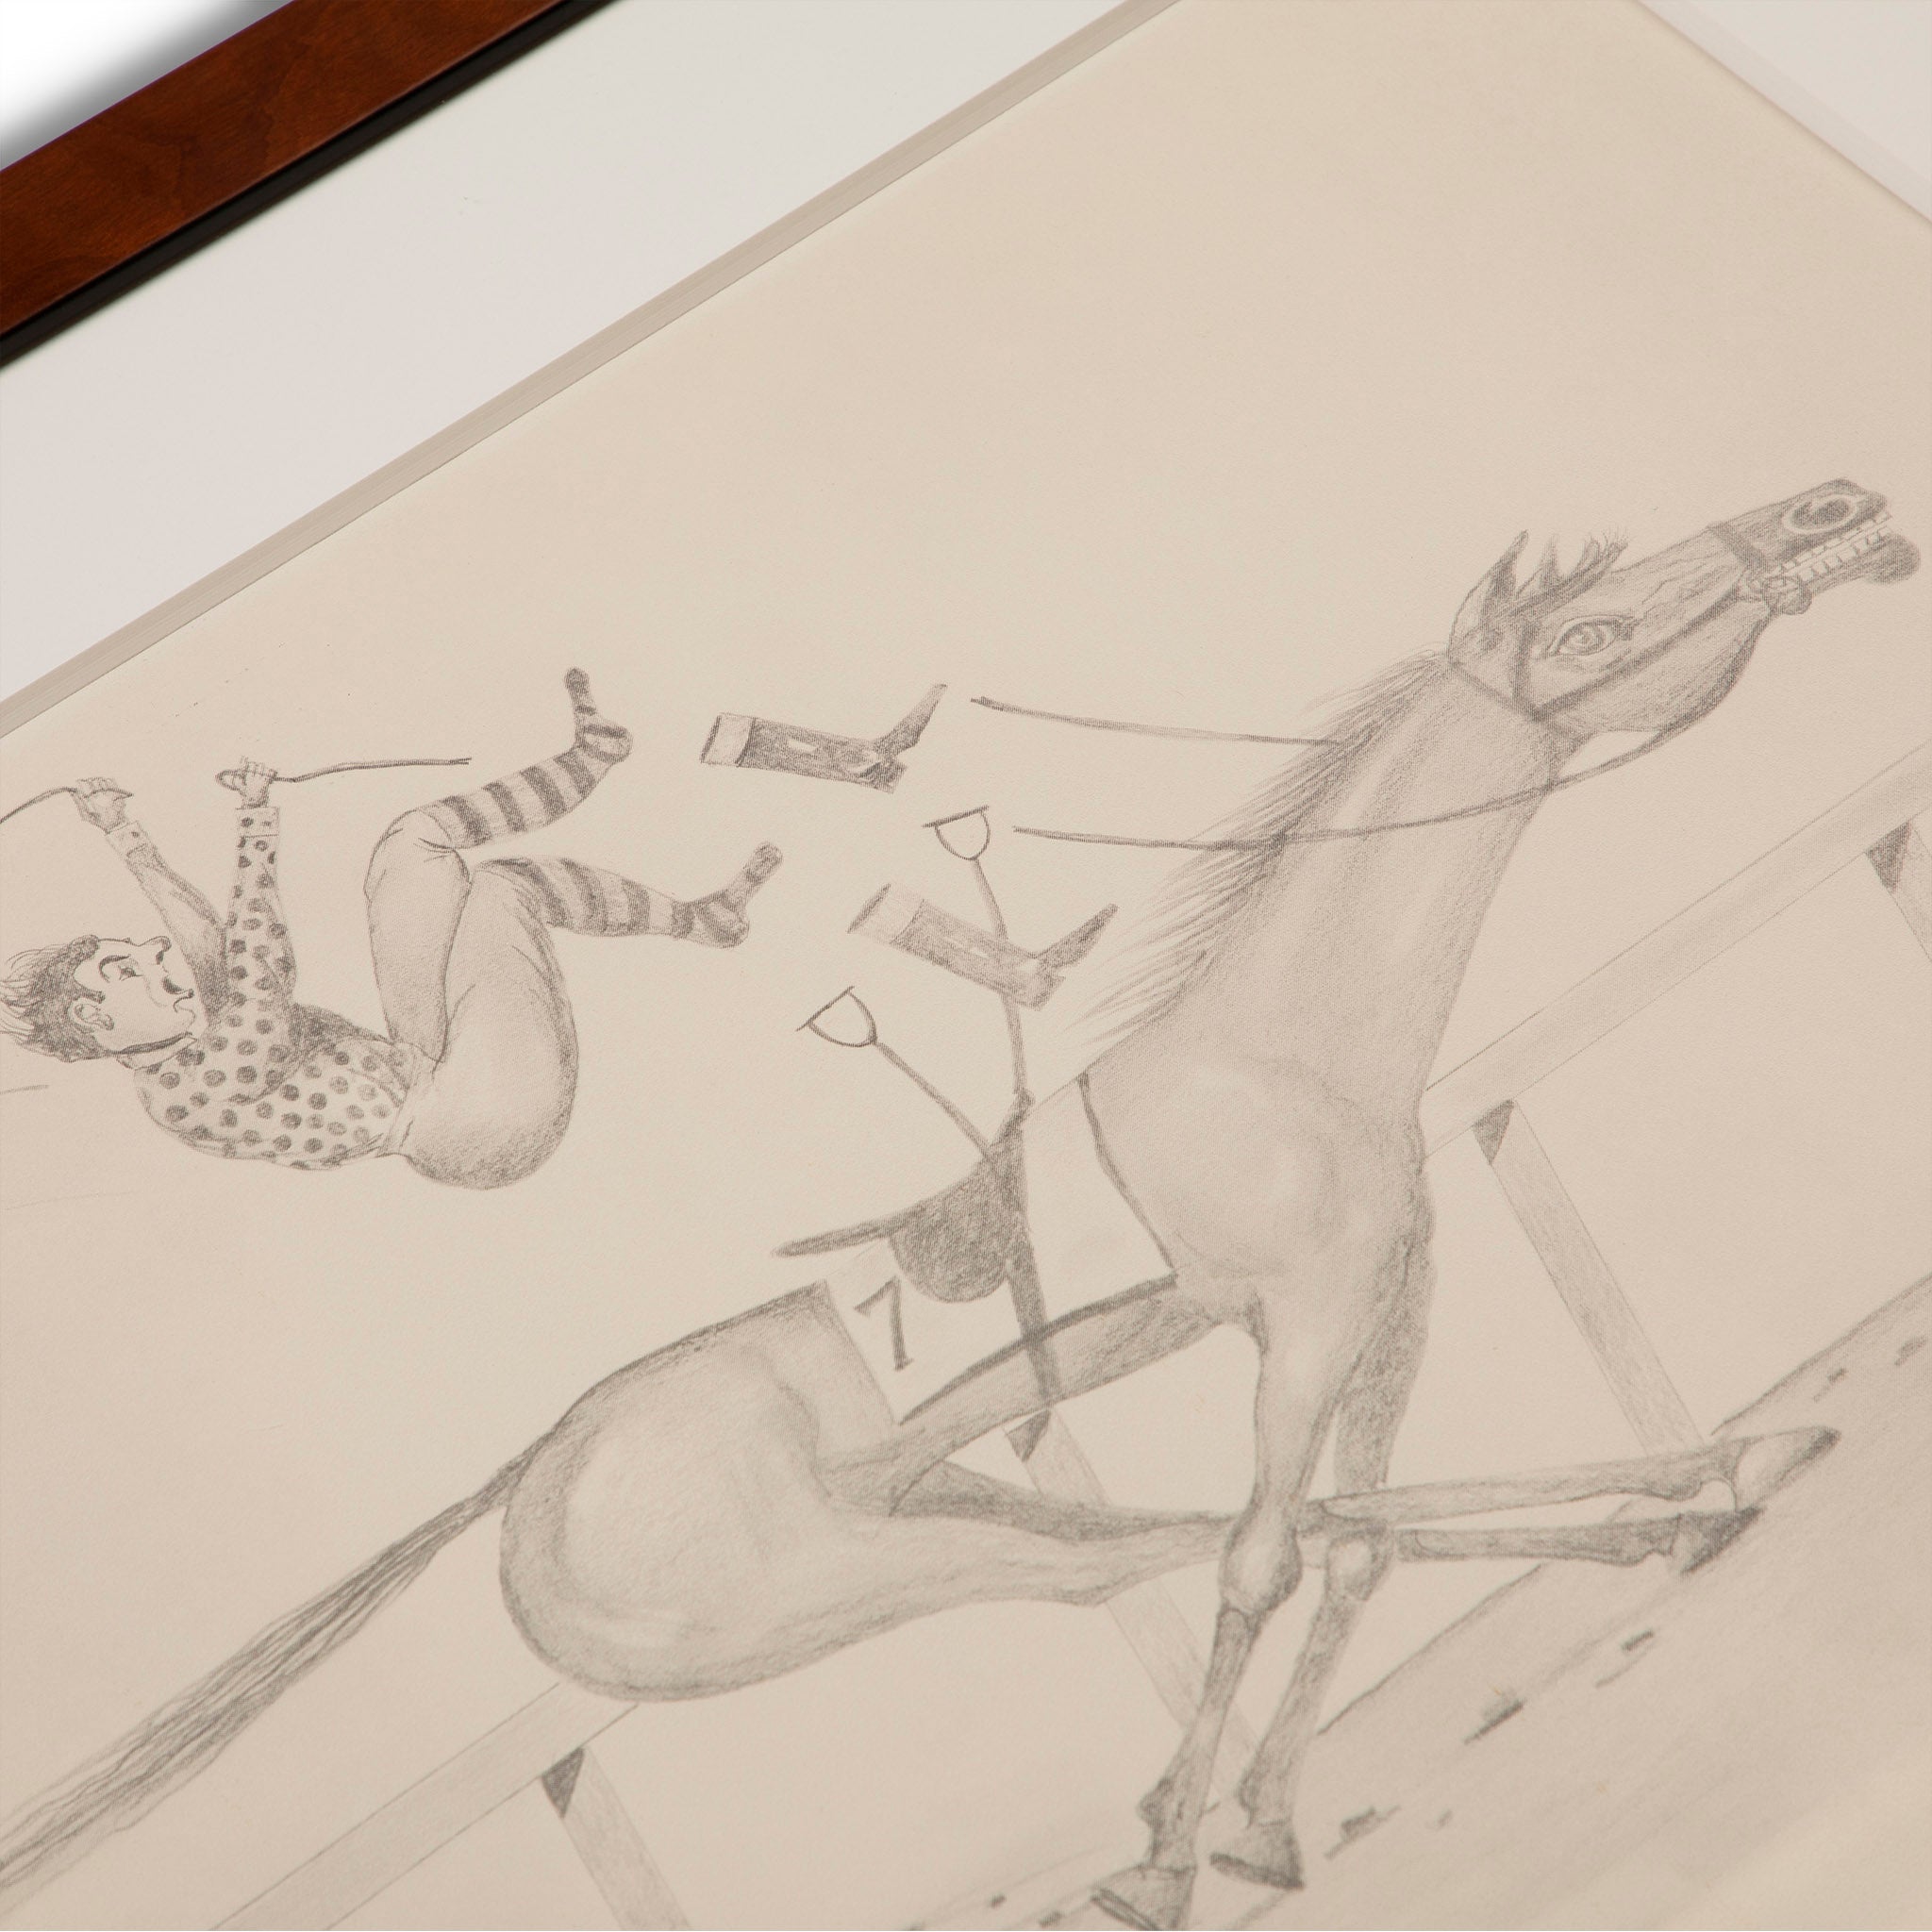 R.C. Fagan The Fast Breaker! Jockey Equestrian Print